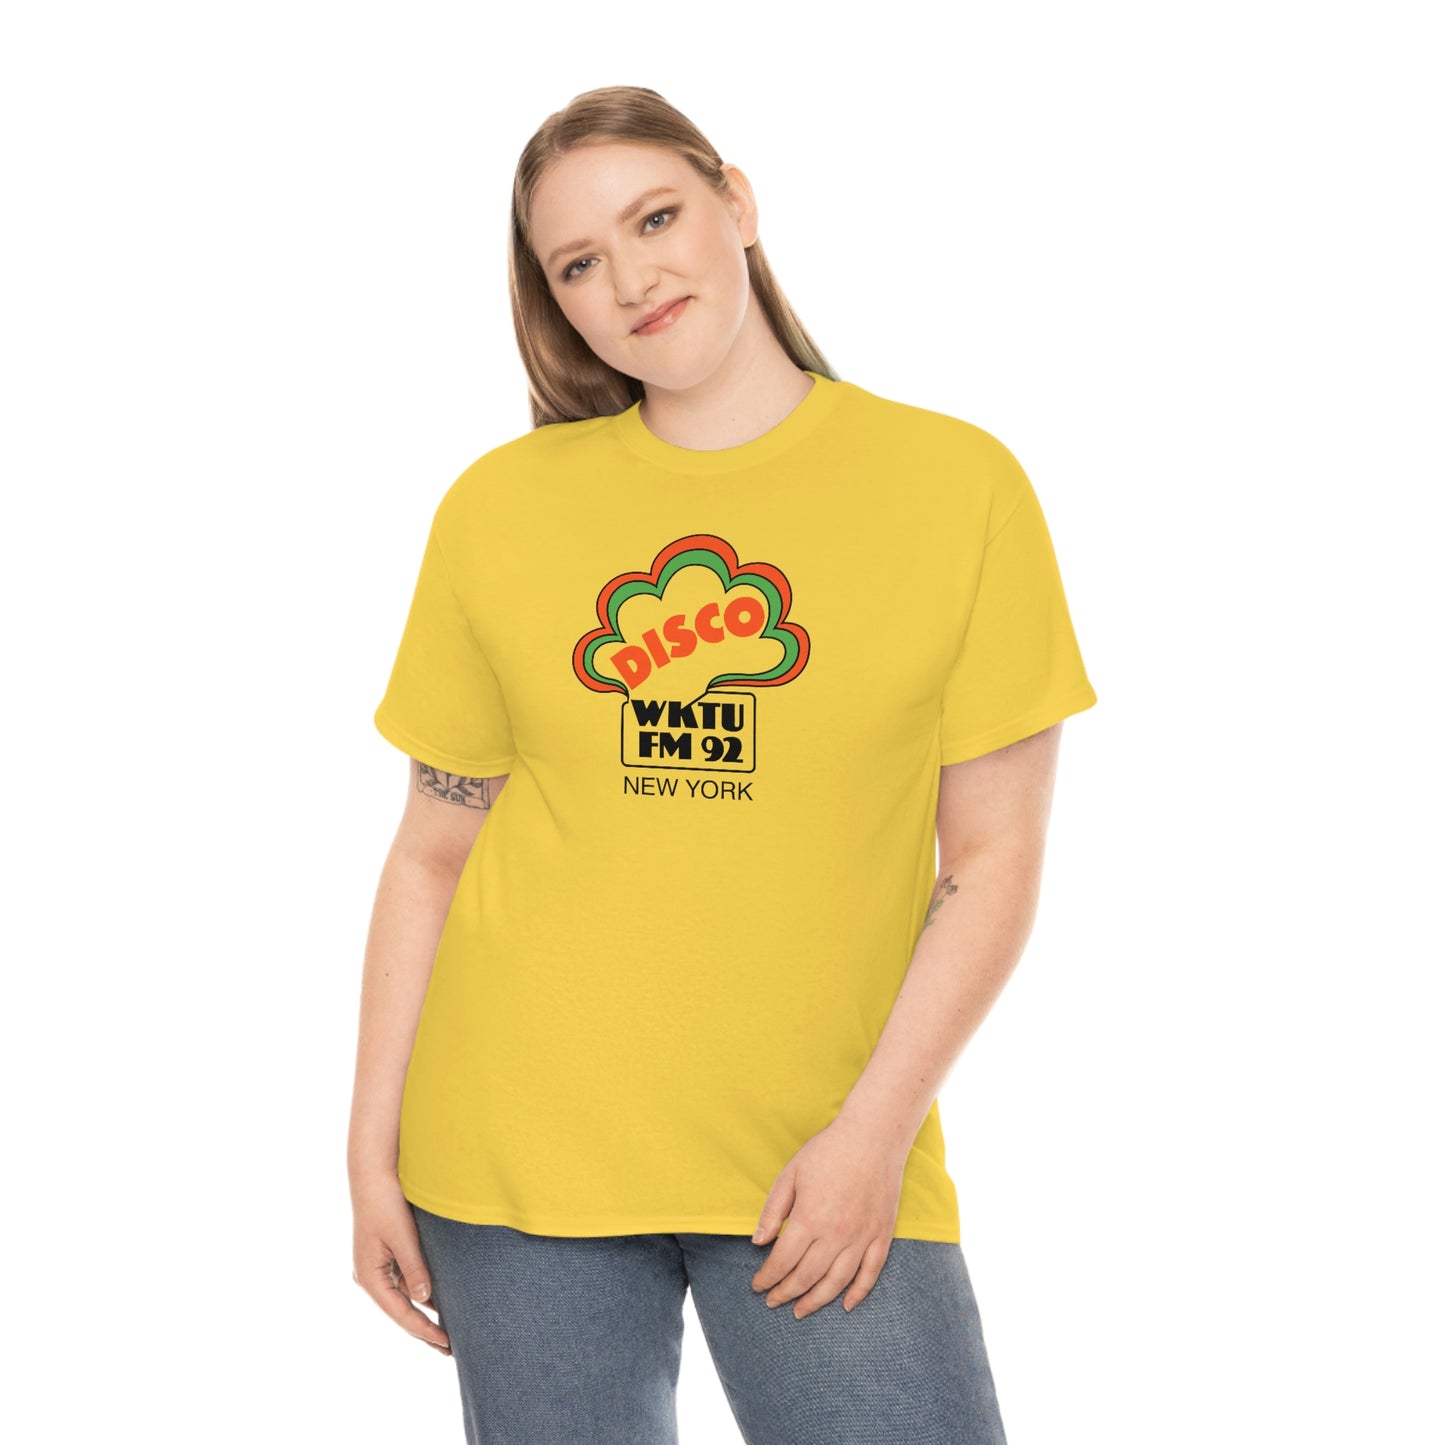 WKTU FM 92 New York Disco T-Shirt